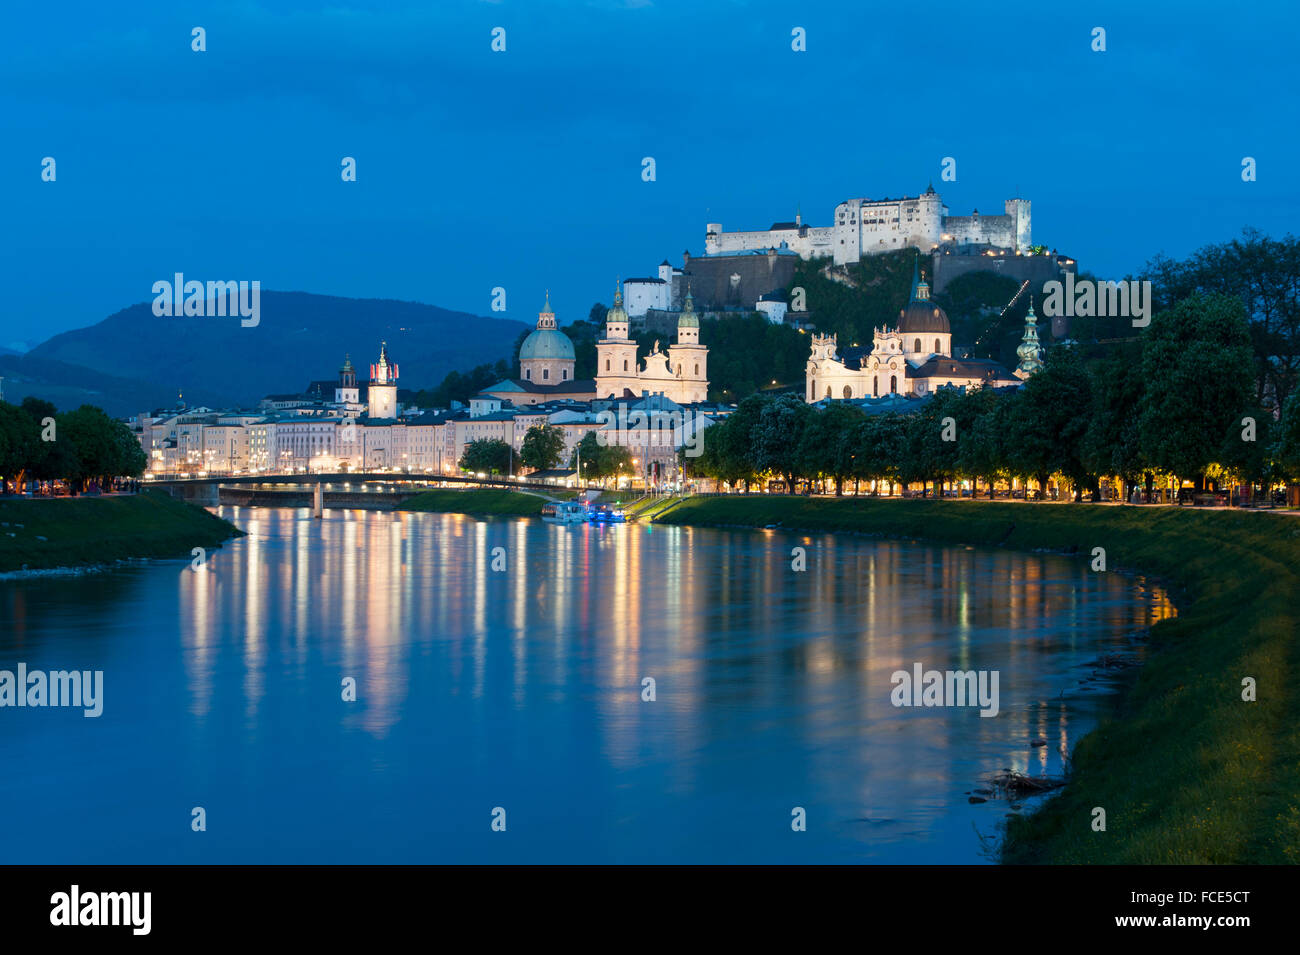 Hohensalzburg Fortress, the historic center of the city of Salzburg, a UNESCO World Heritage Site, Austria Stock Photo